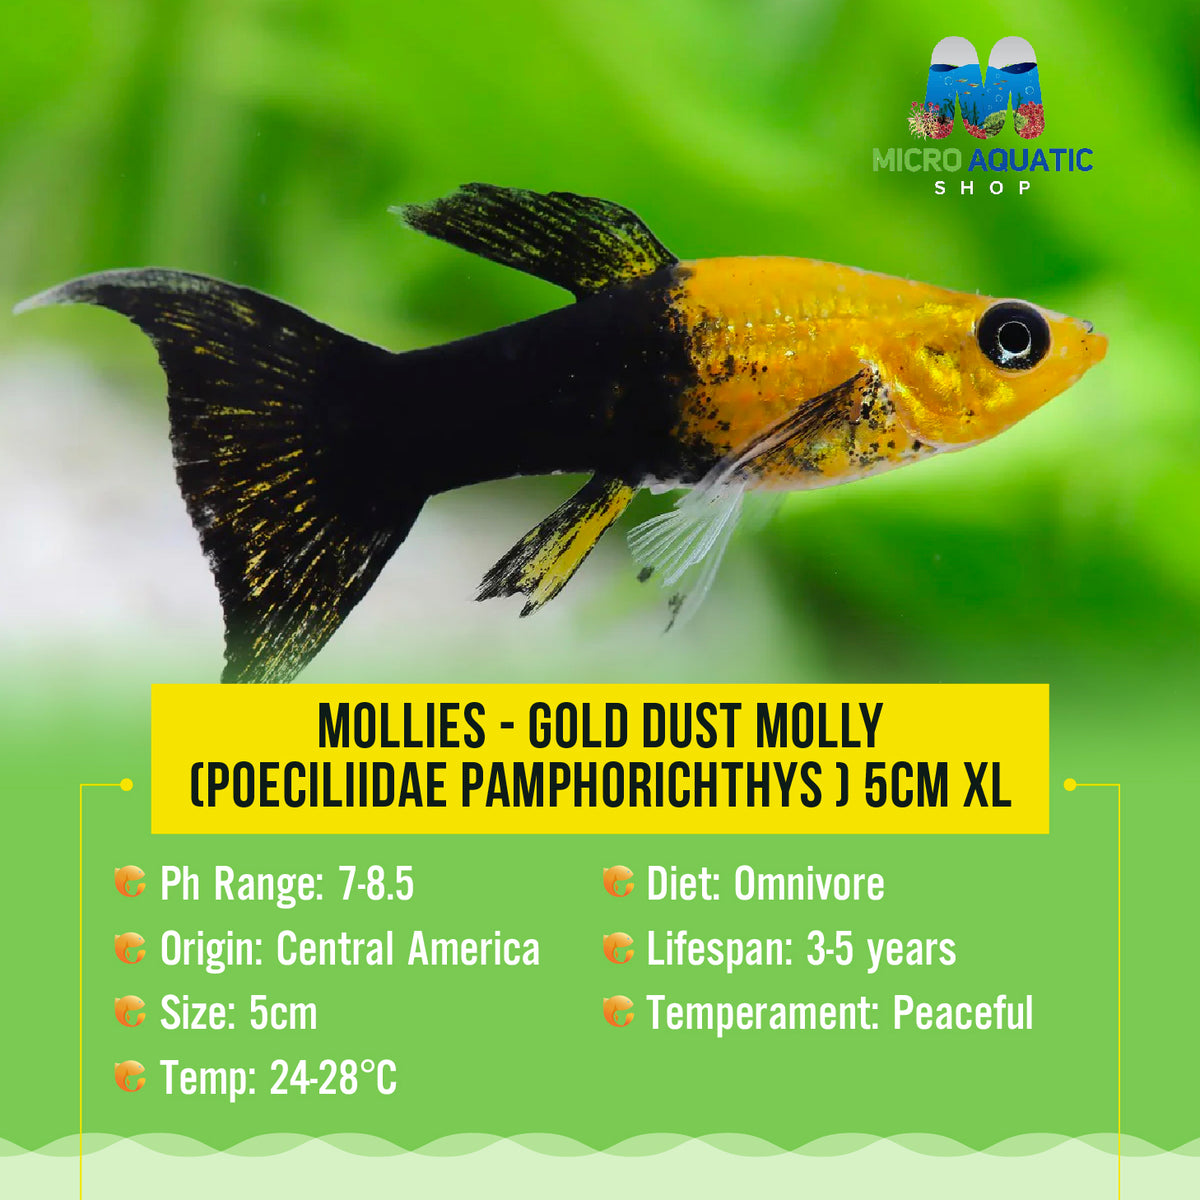 Mollies – Gold Dust Molly (Poeciliidae pamphorichthys ) 5cm XL